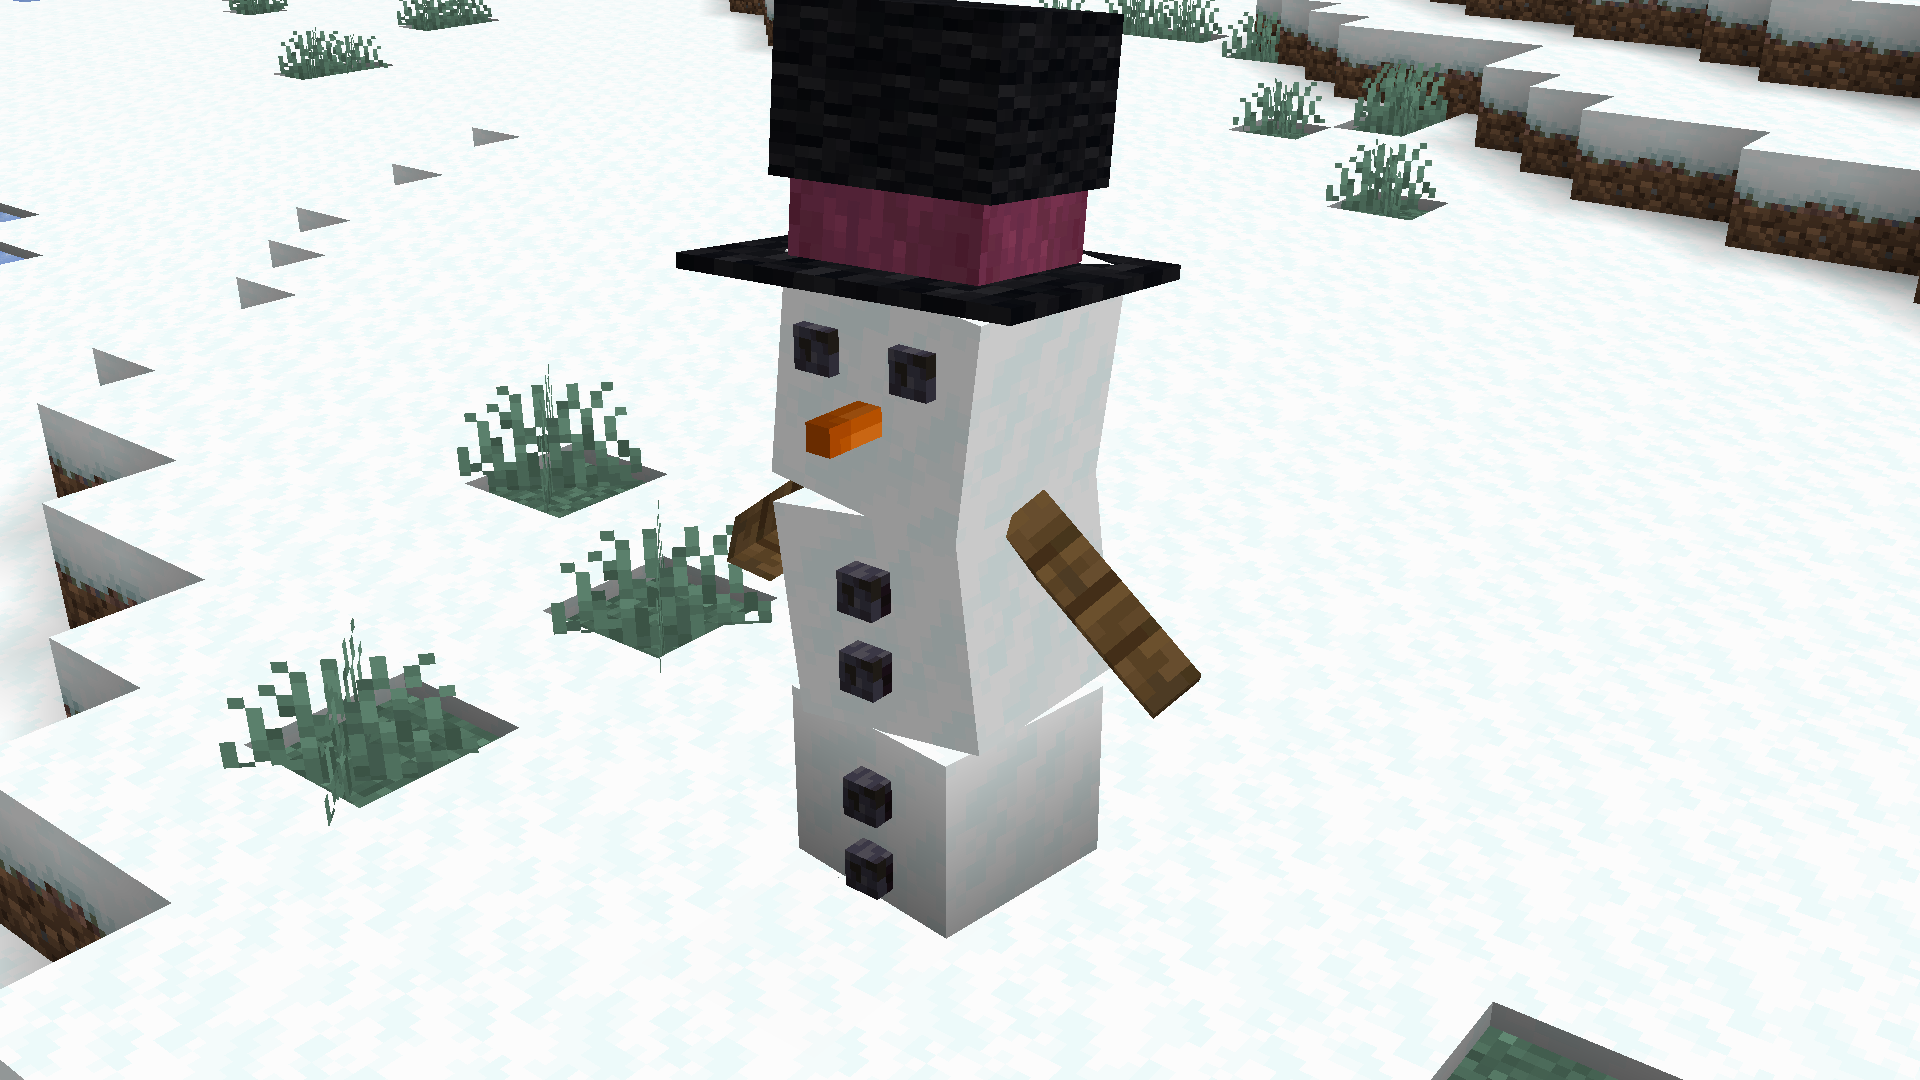 Detailed snowman